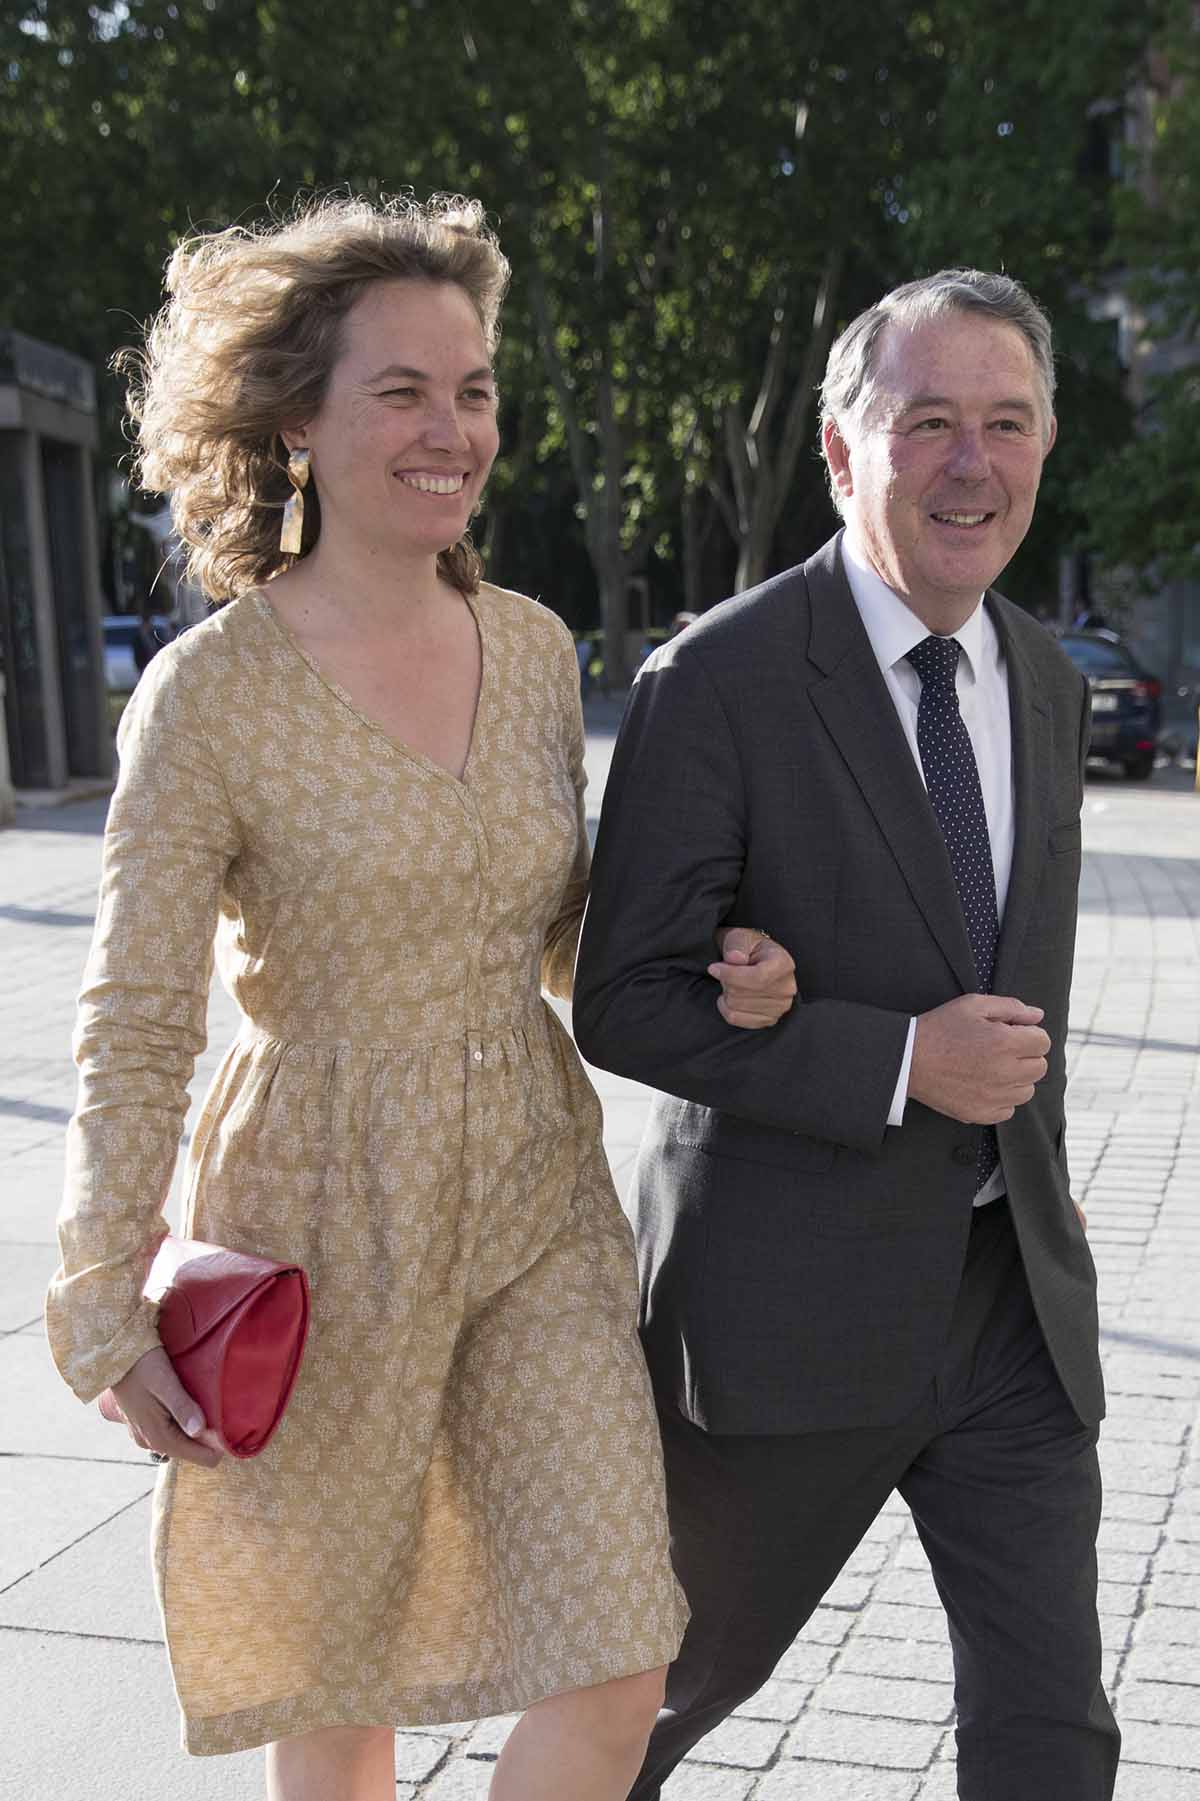 Politician Jose Maria Michavila and Alejandra Salinas attending the premiere of the opera "Capricho" in Madrid on Monday , 27 May 2019.